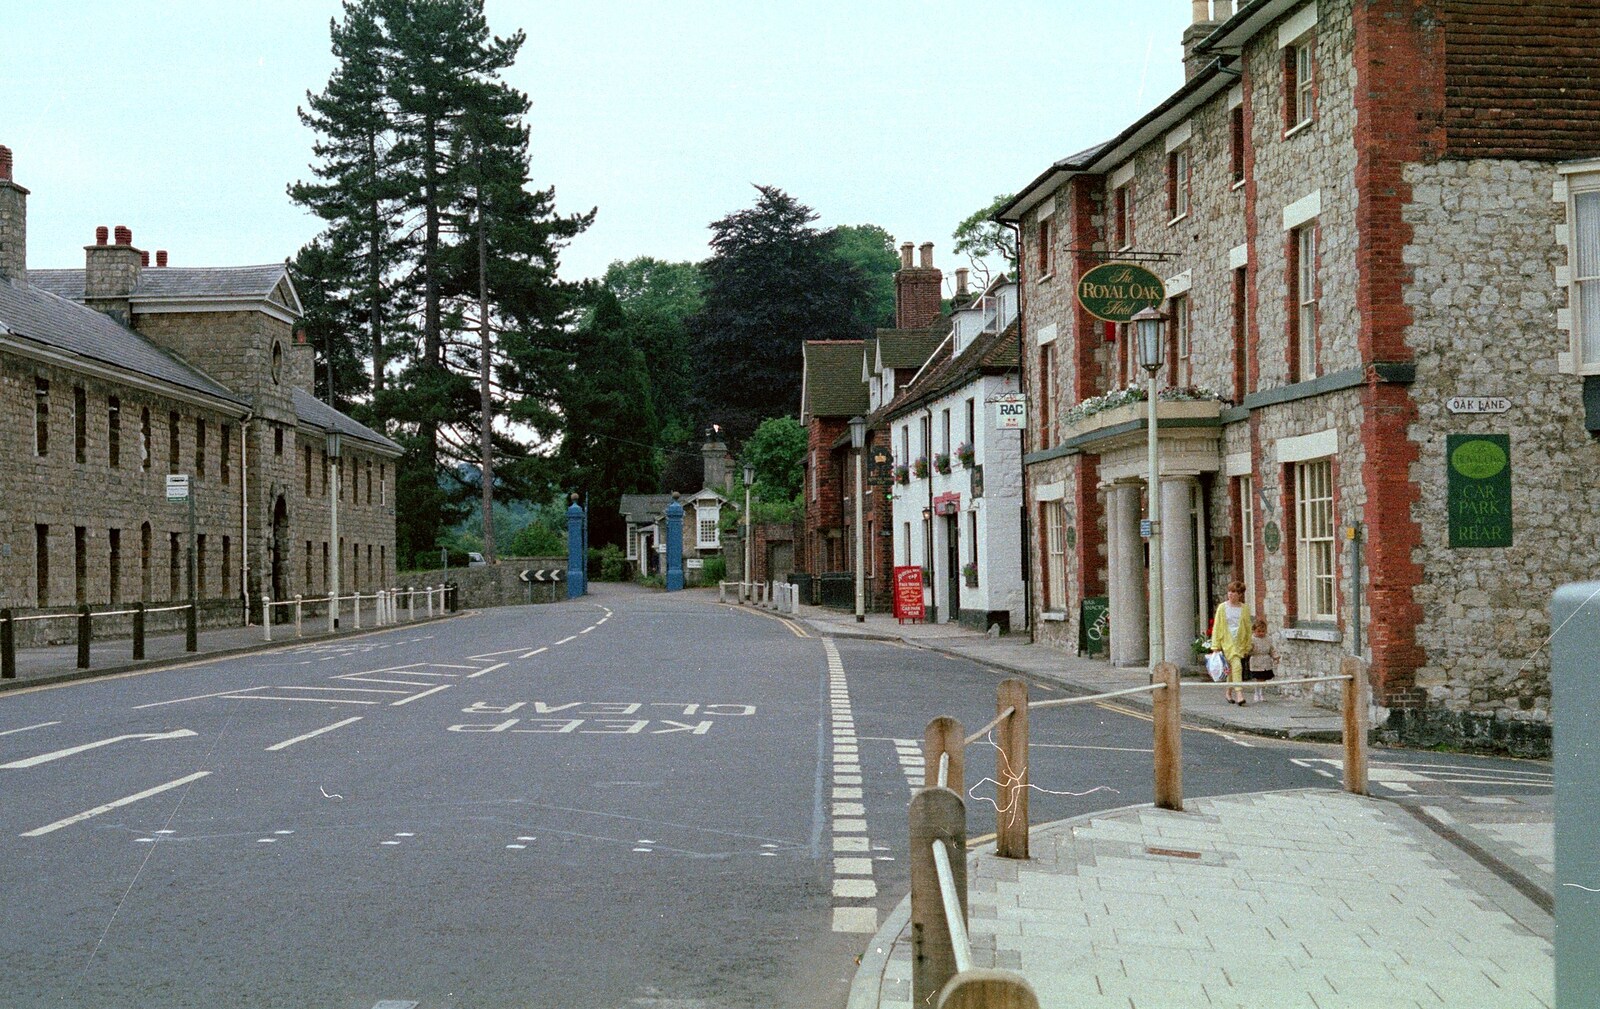 A Sevenoaks street from A Trip to Groombridge, Kent - 10th July 1986